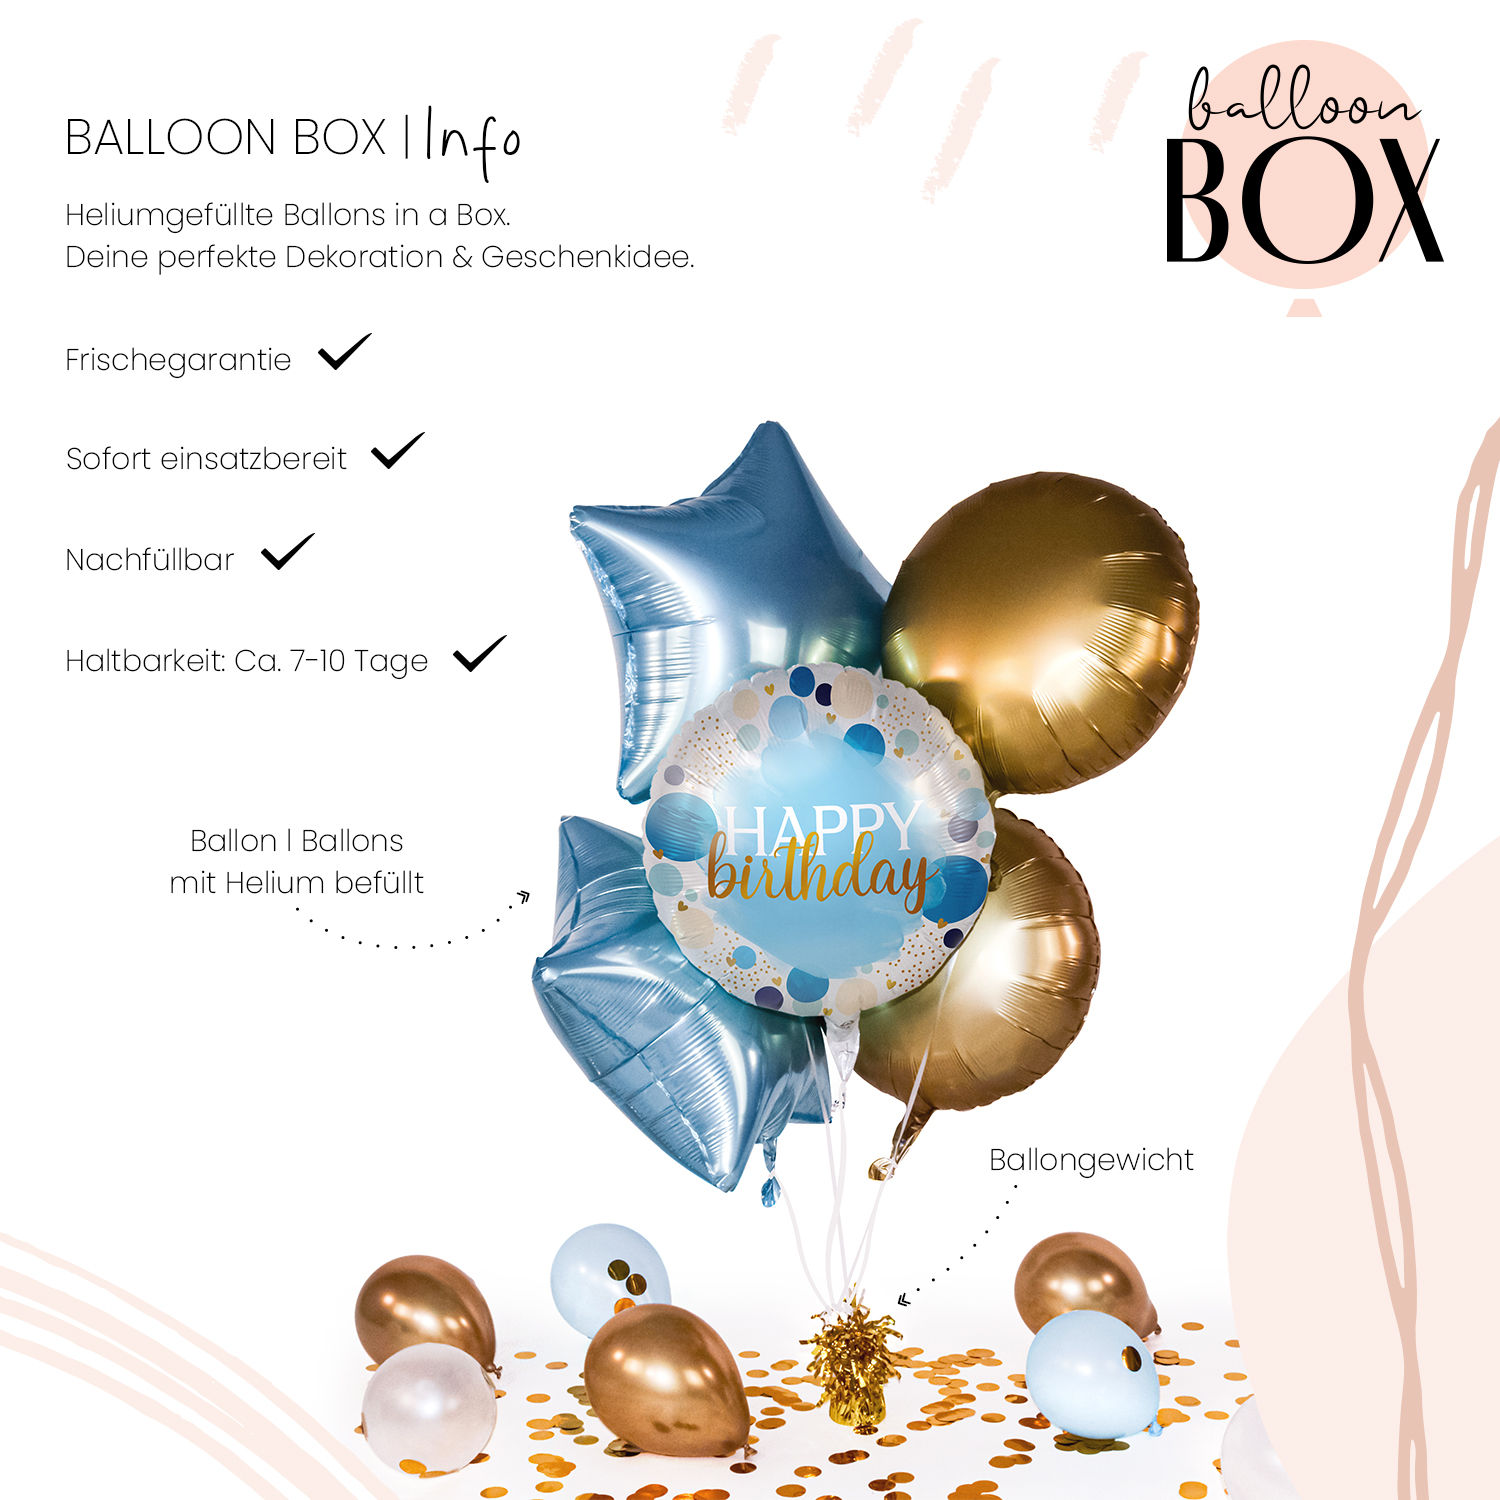 Heliumballon in a Box - Lucky Birthday